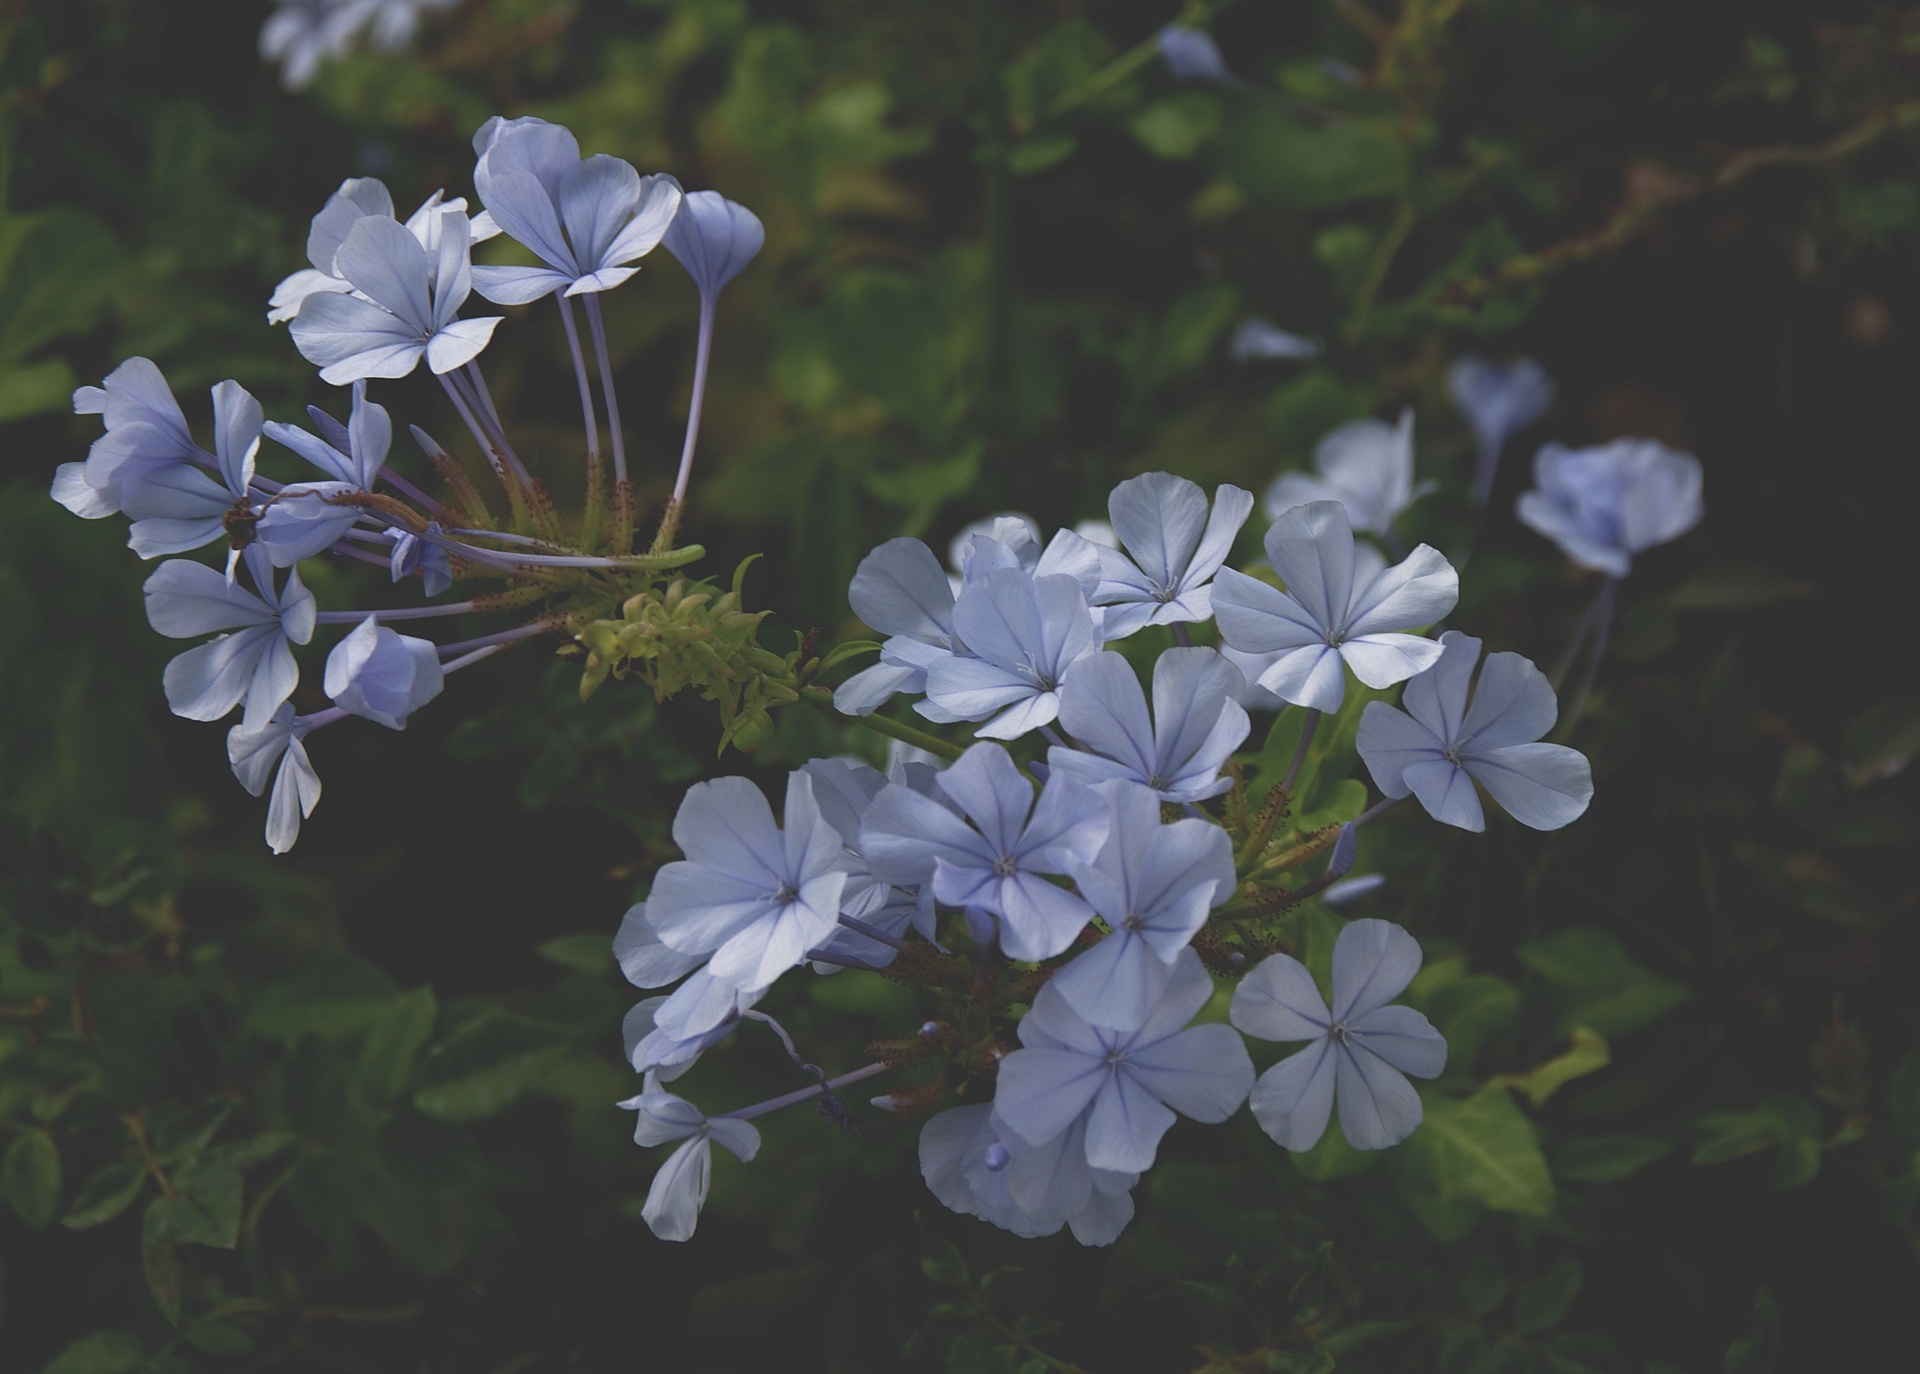 Blue Plumbago Flower